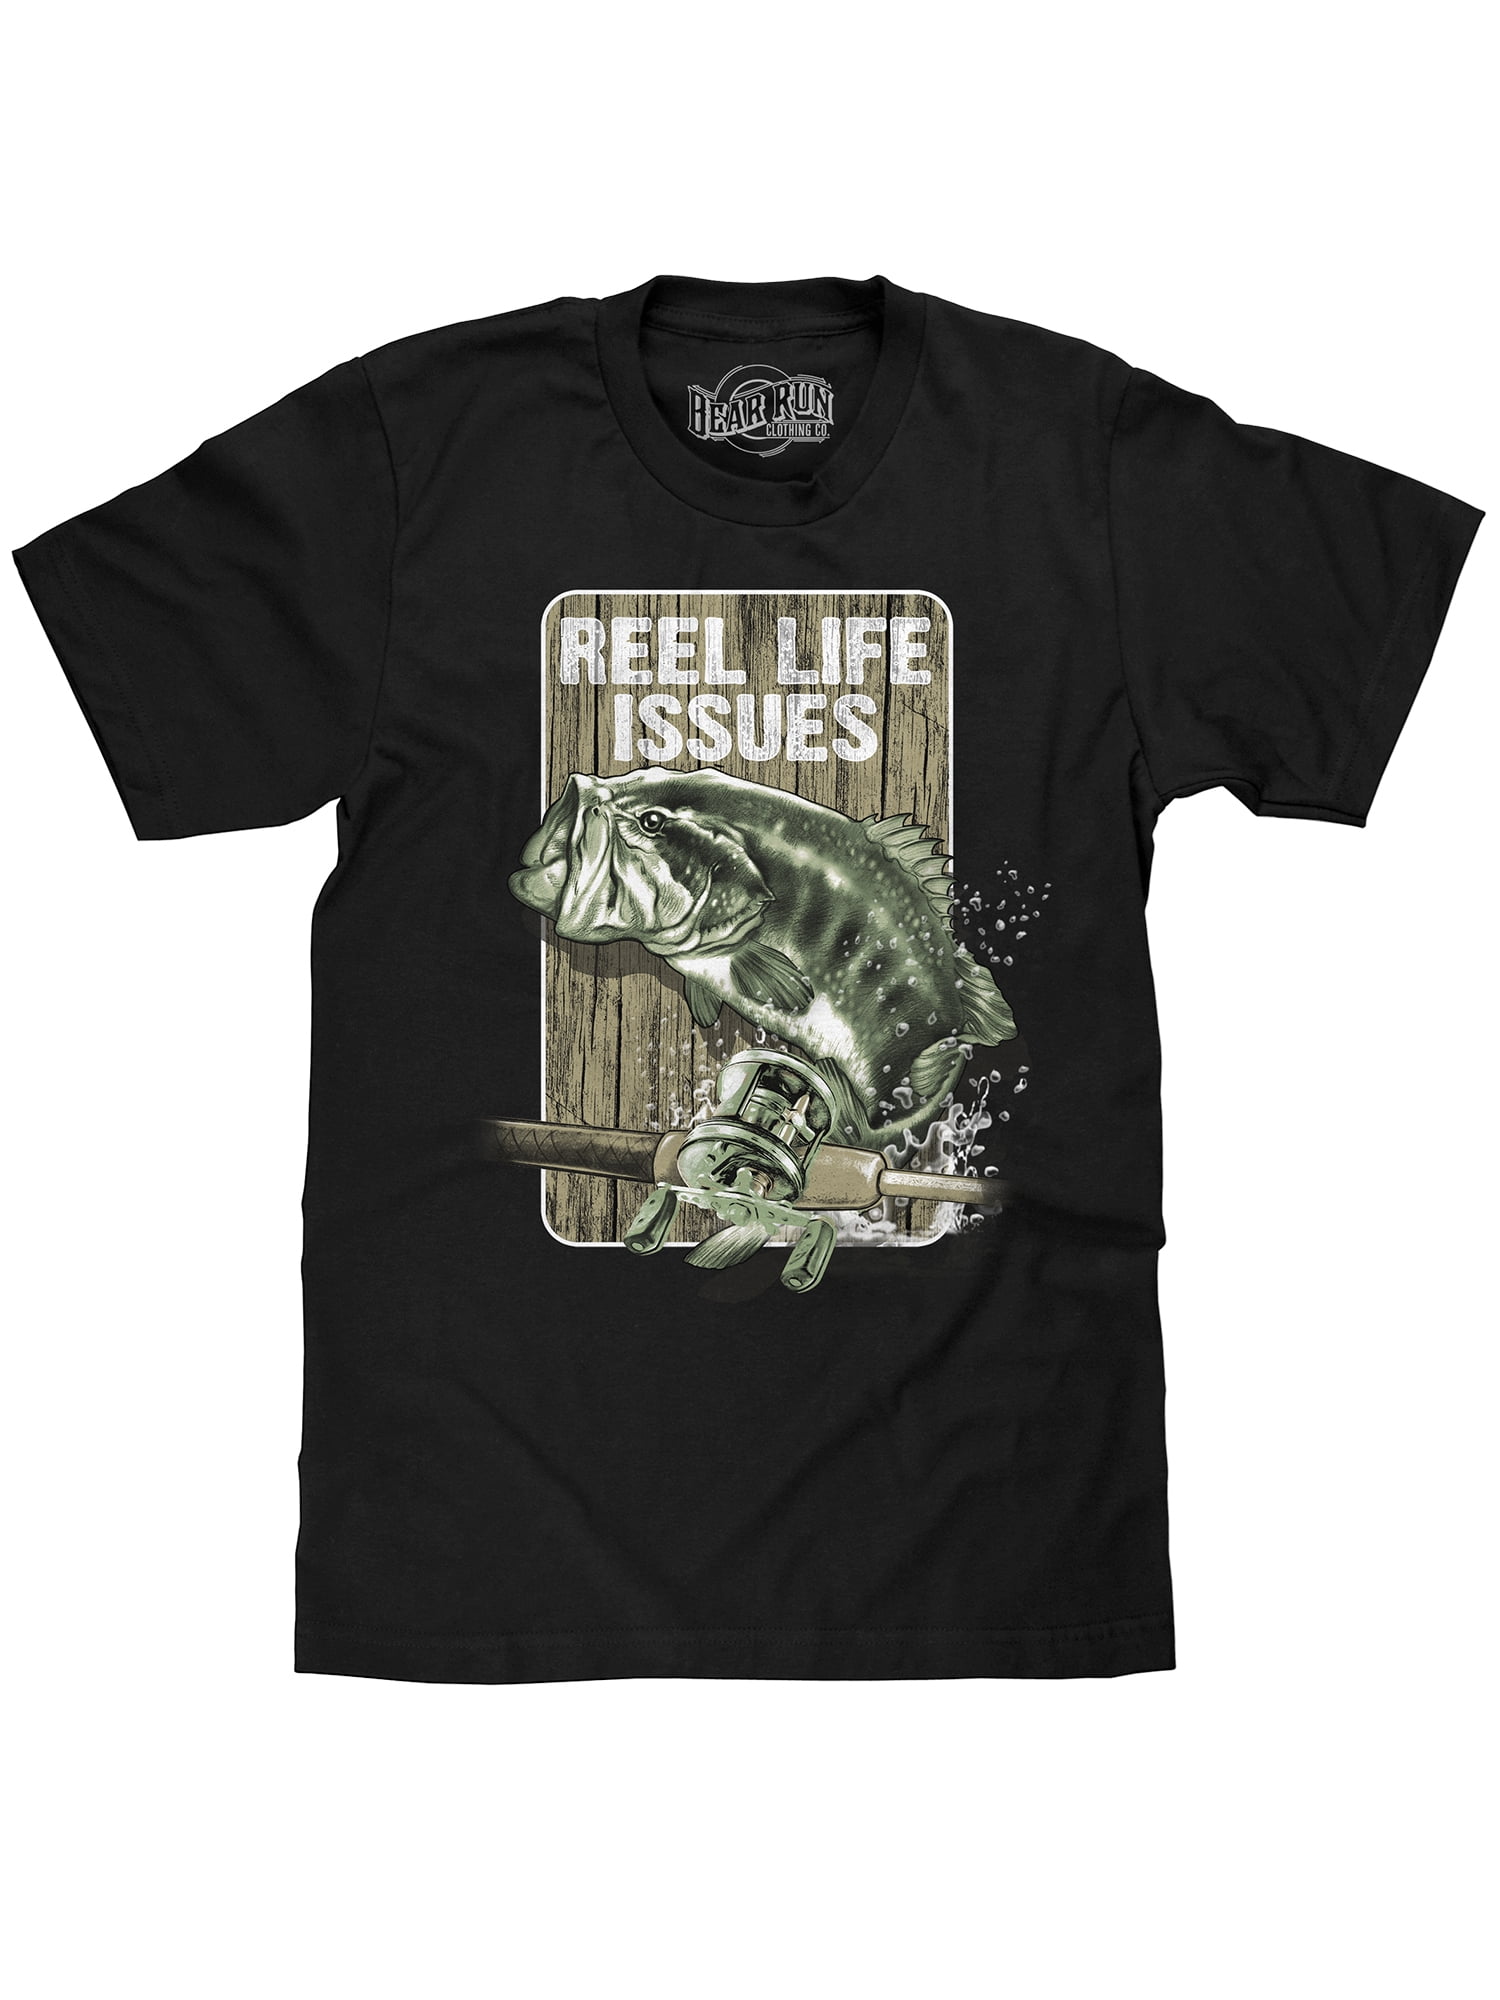 Bear Run Clothing Co. Men's Reel Life Issues Bass Fishing T-Shirt, Size: Medium, Black